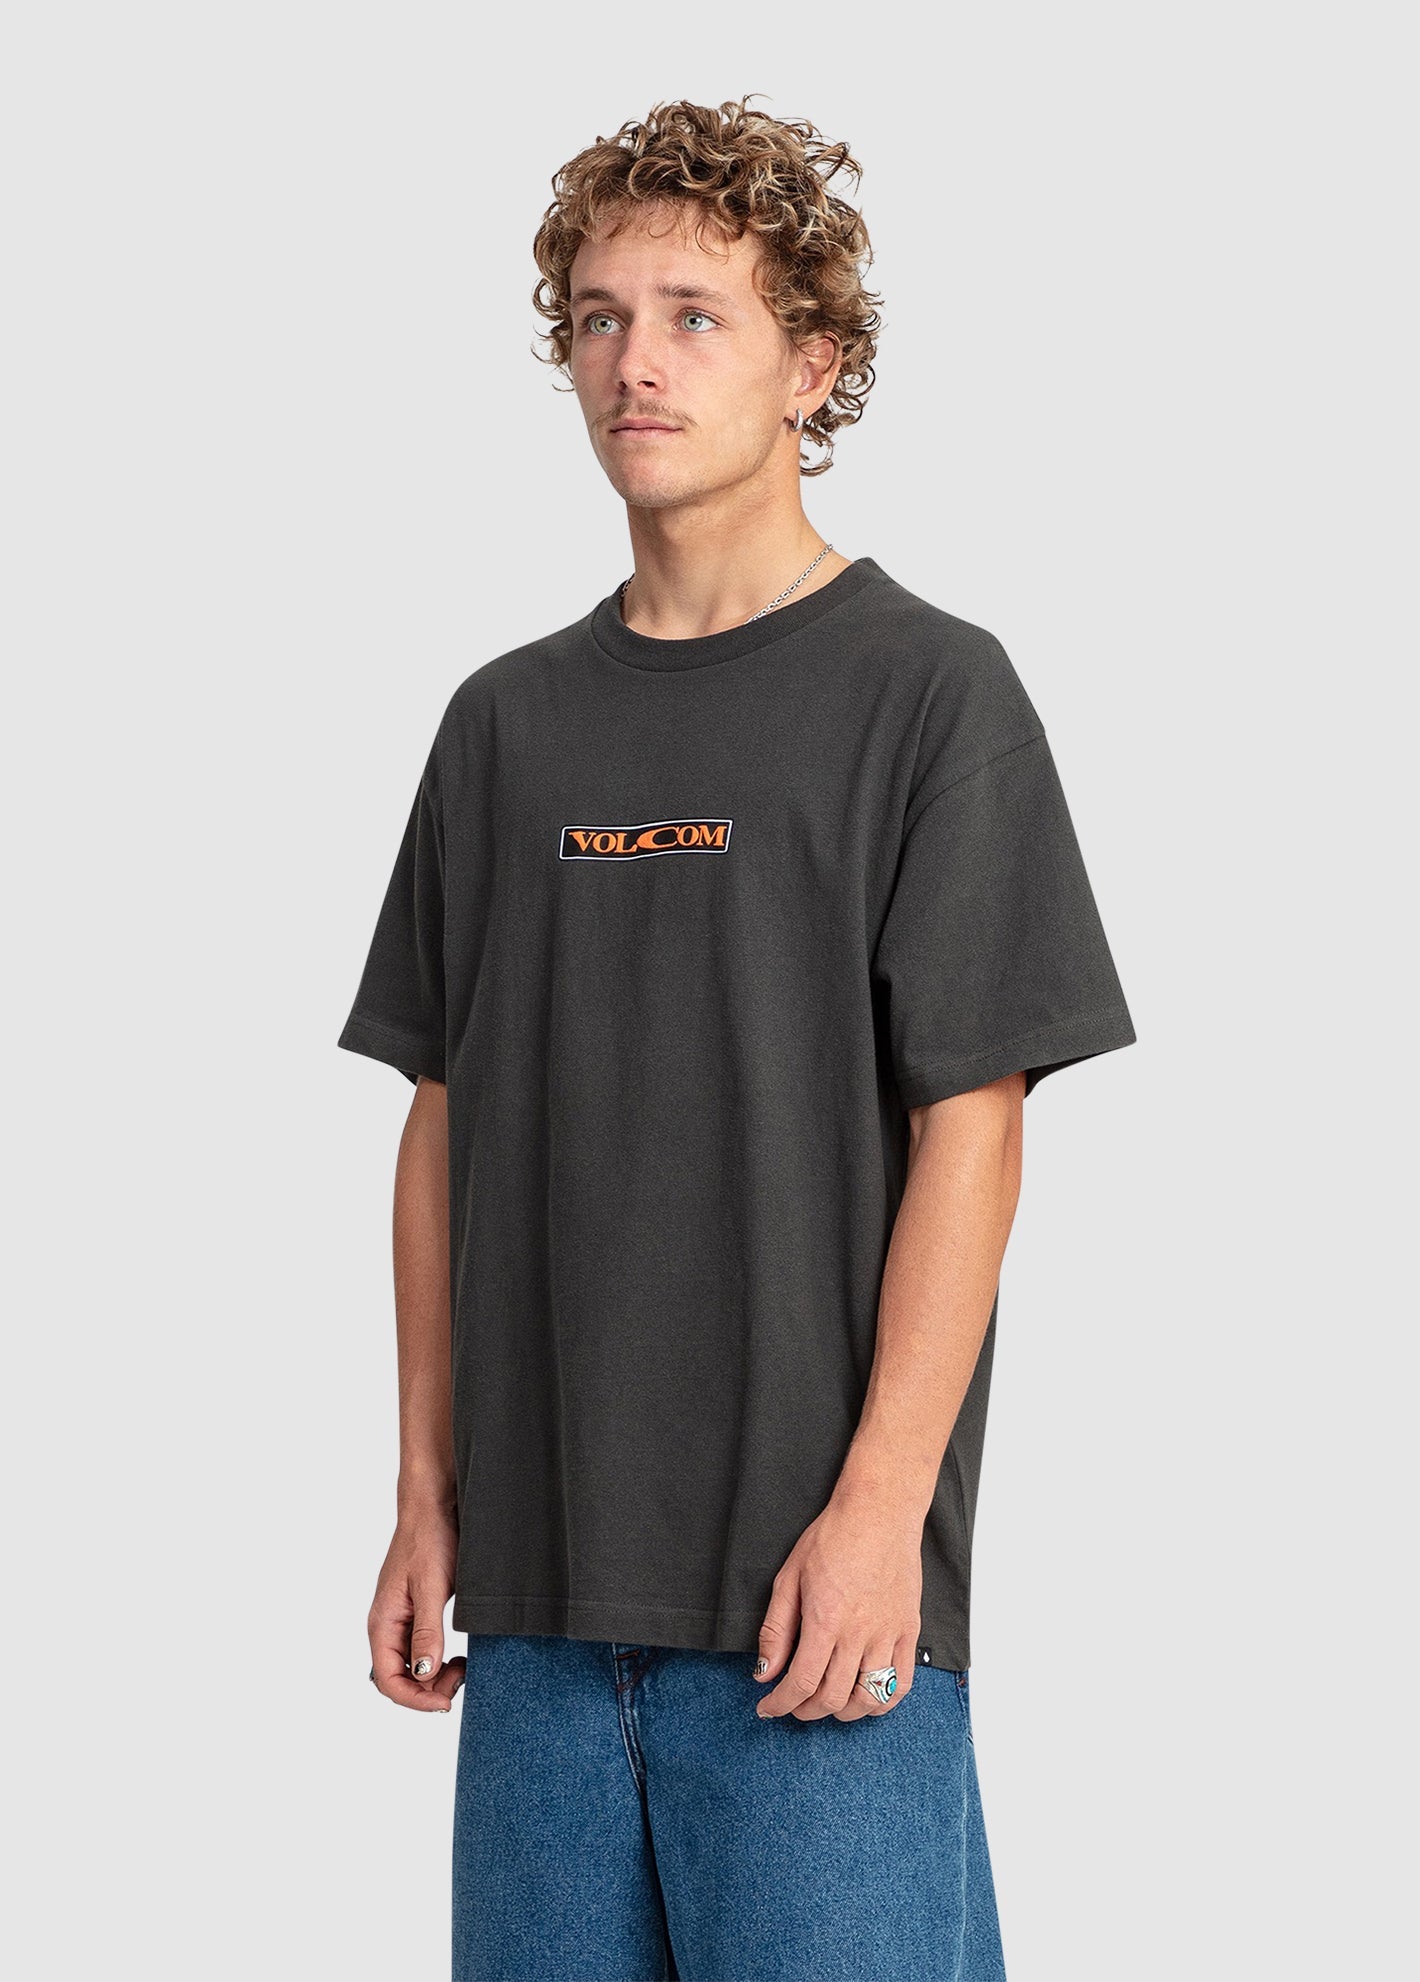 Ozcorpo Short Sleeve Lse T-Shirt